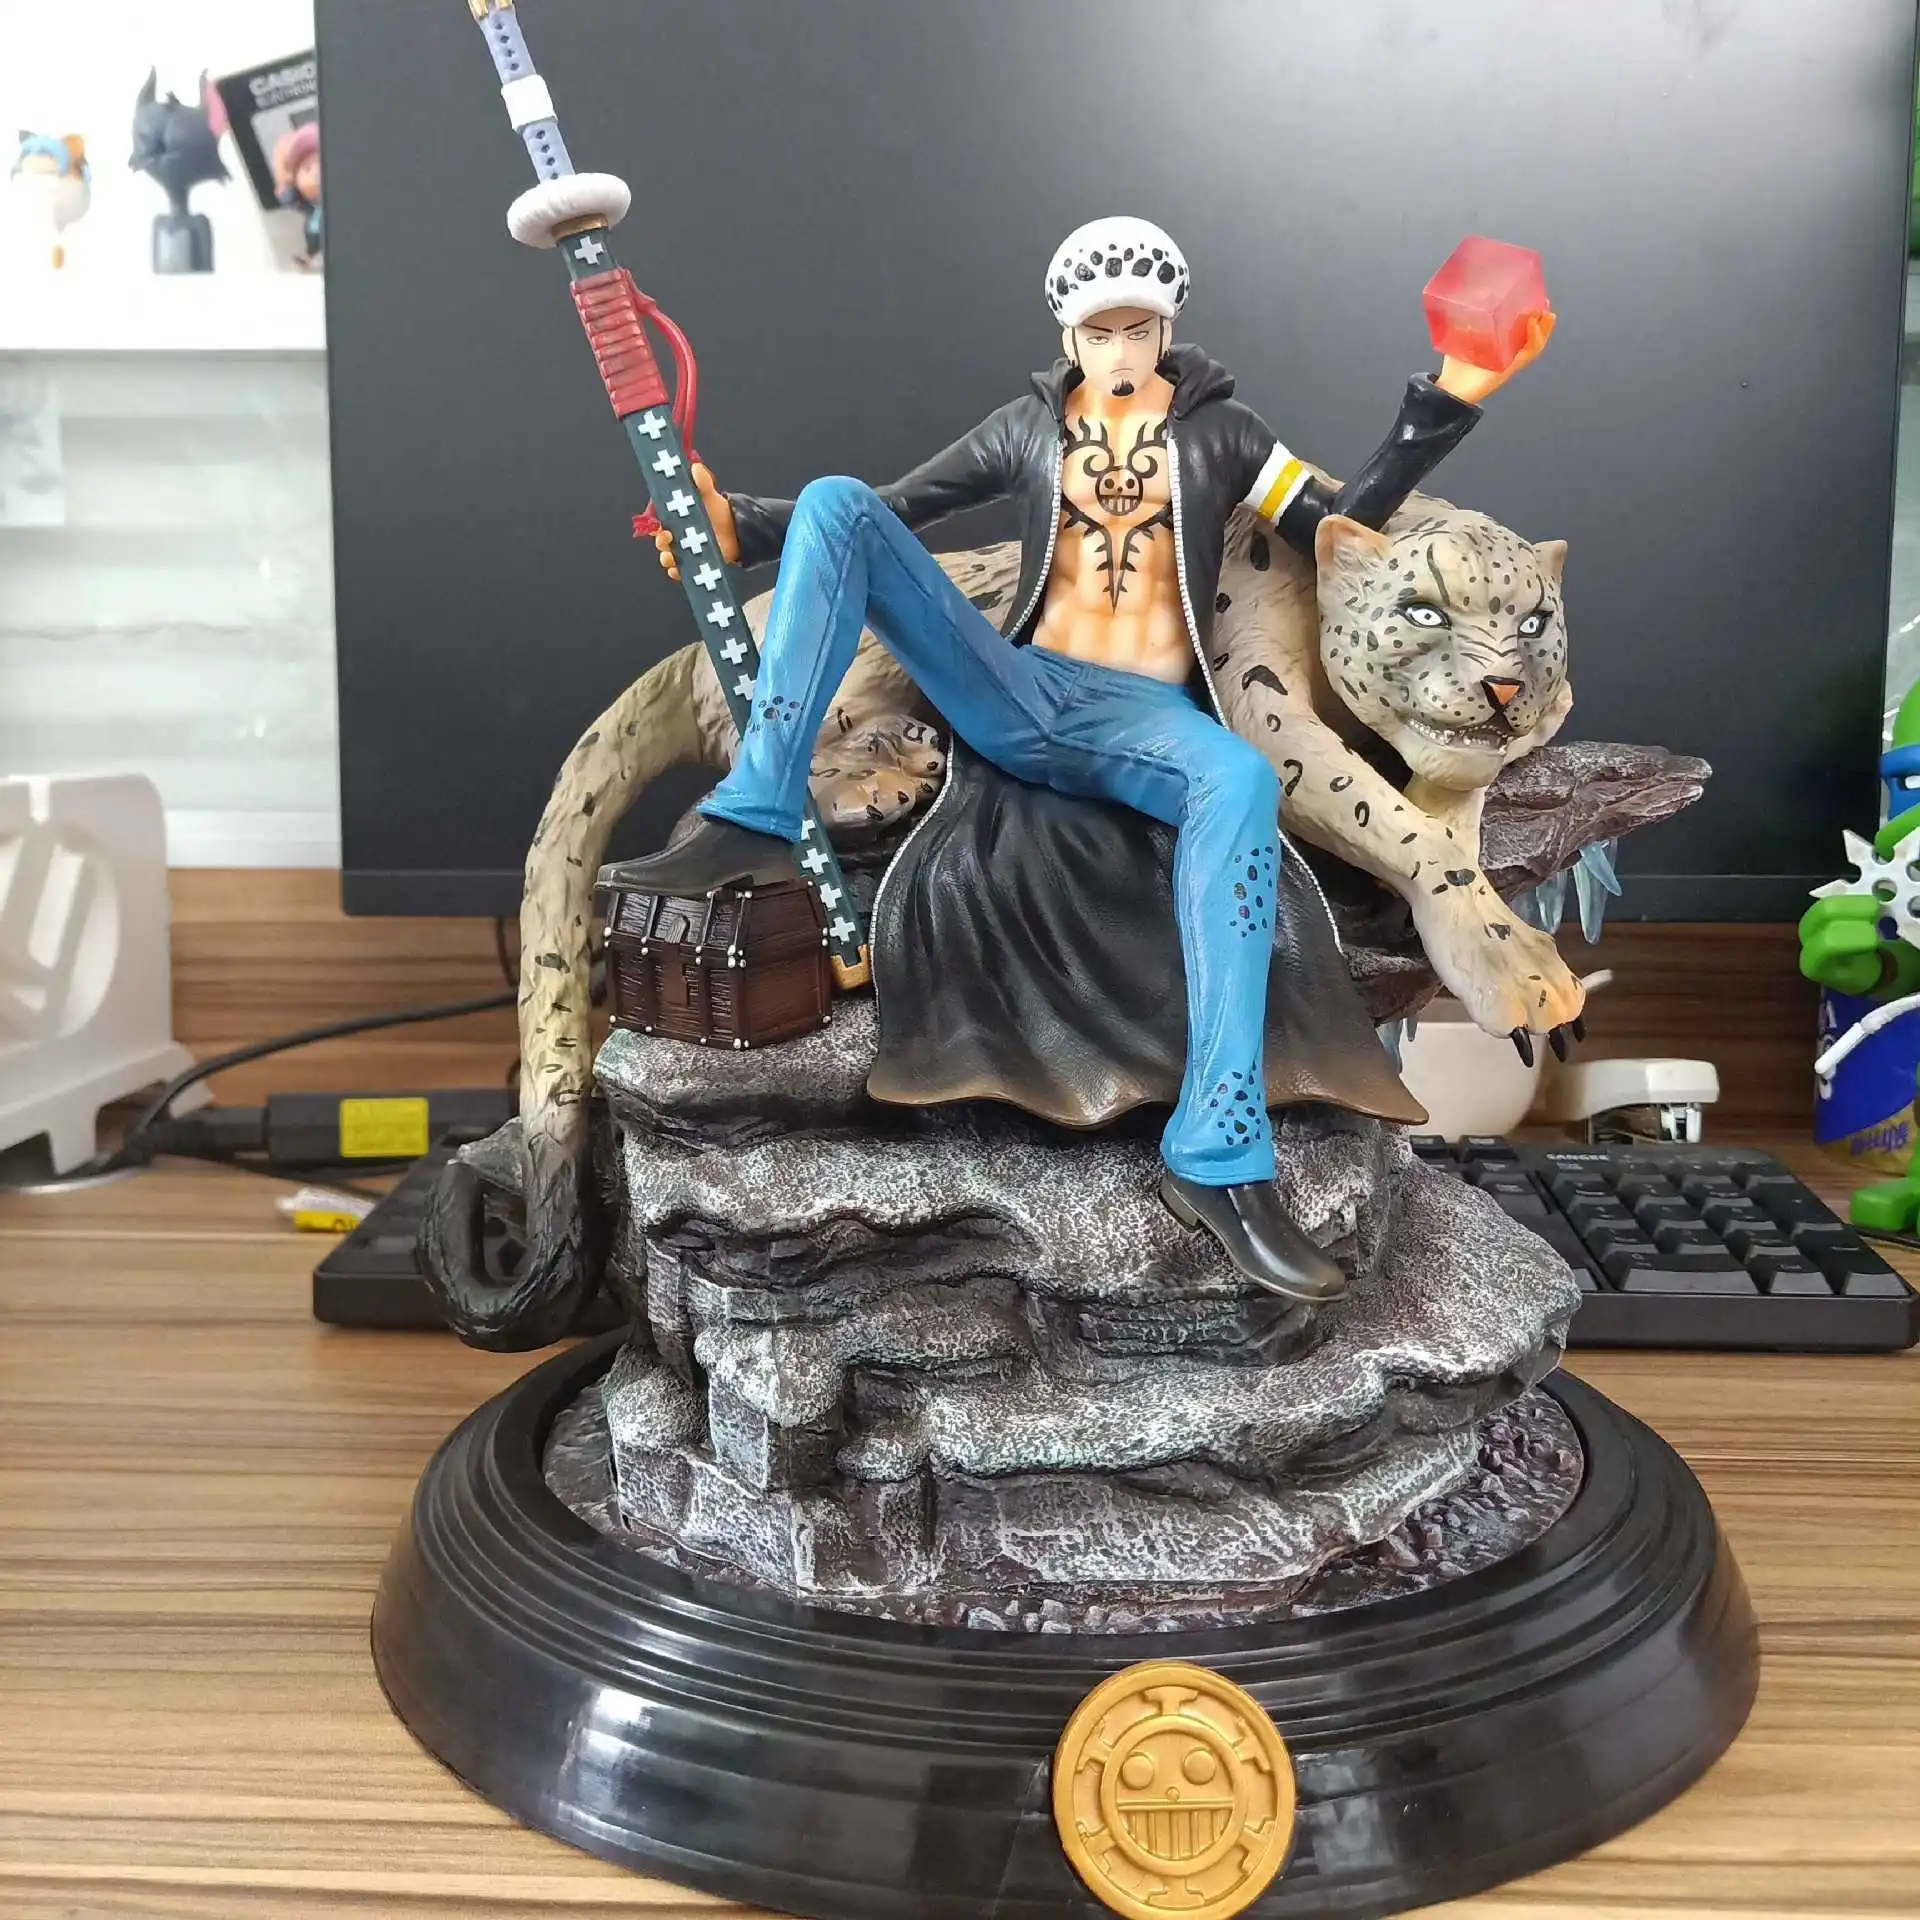 

GK One Piece Trafalgar Law Figure Statue Japan Anime Luffy Sanji Action Figurine Collection Model Toy Christmas Gift 27cm